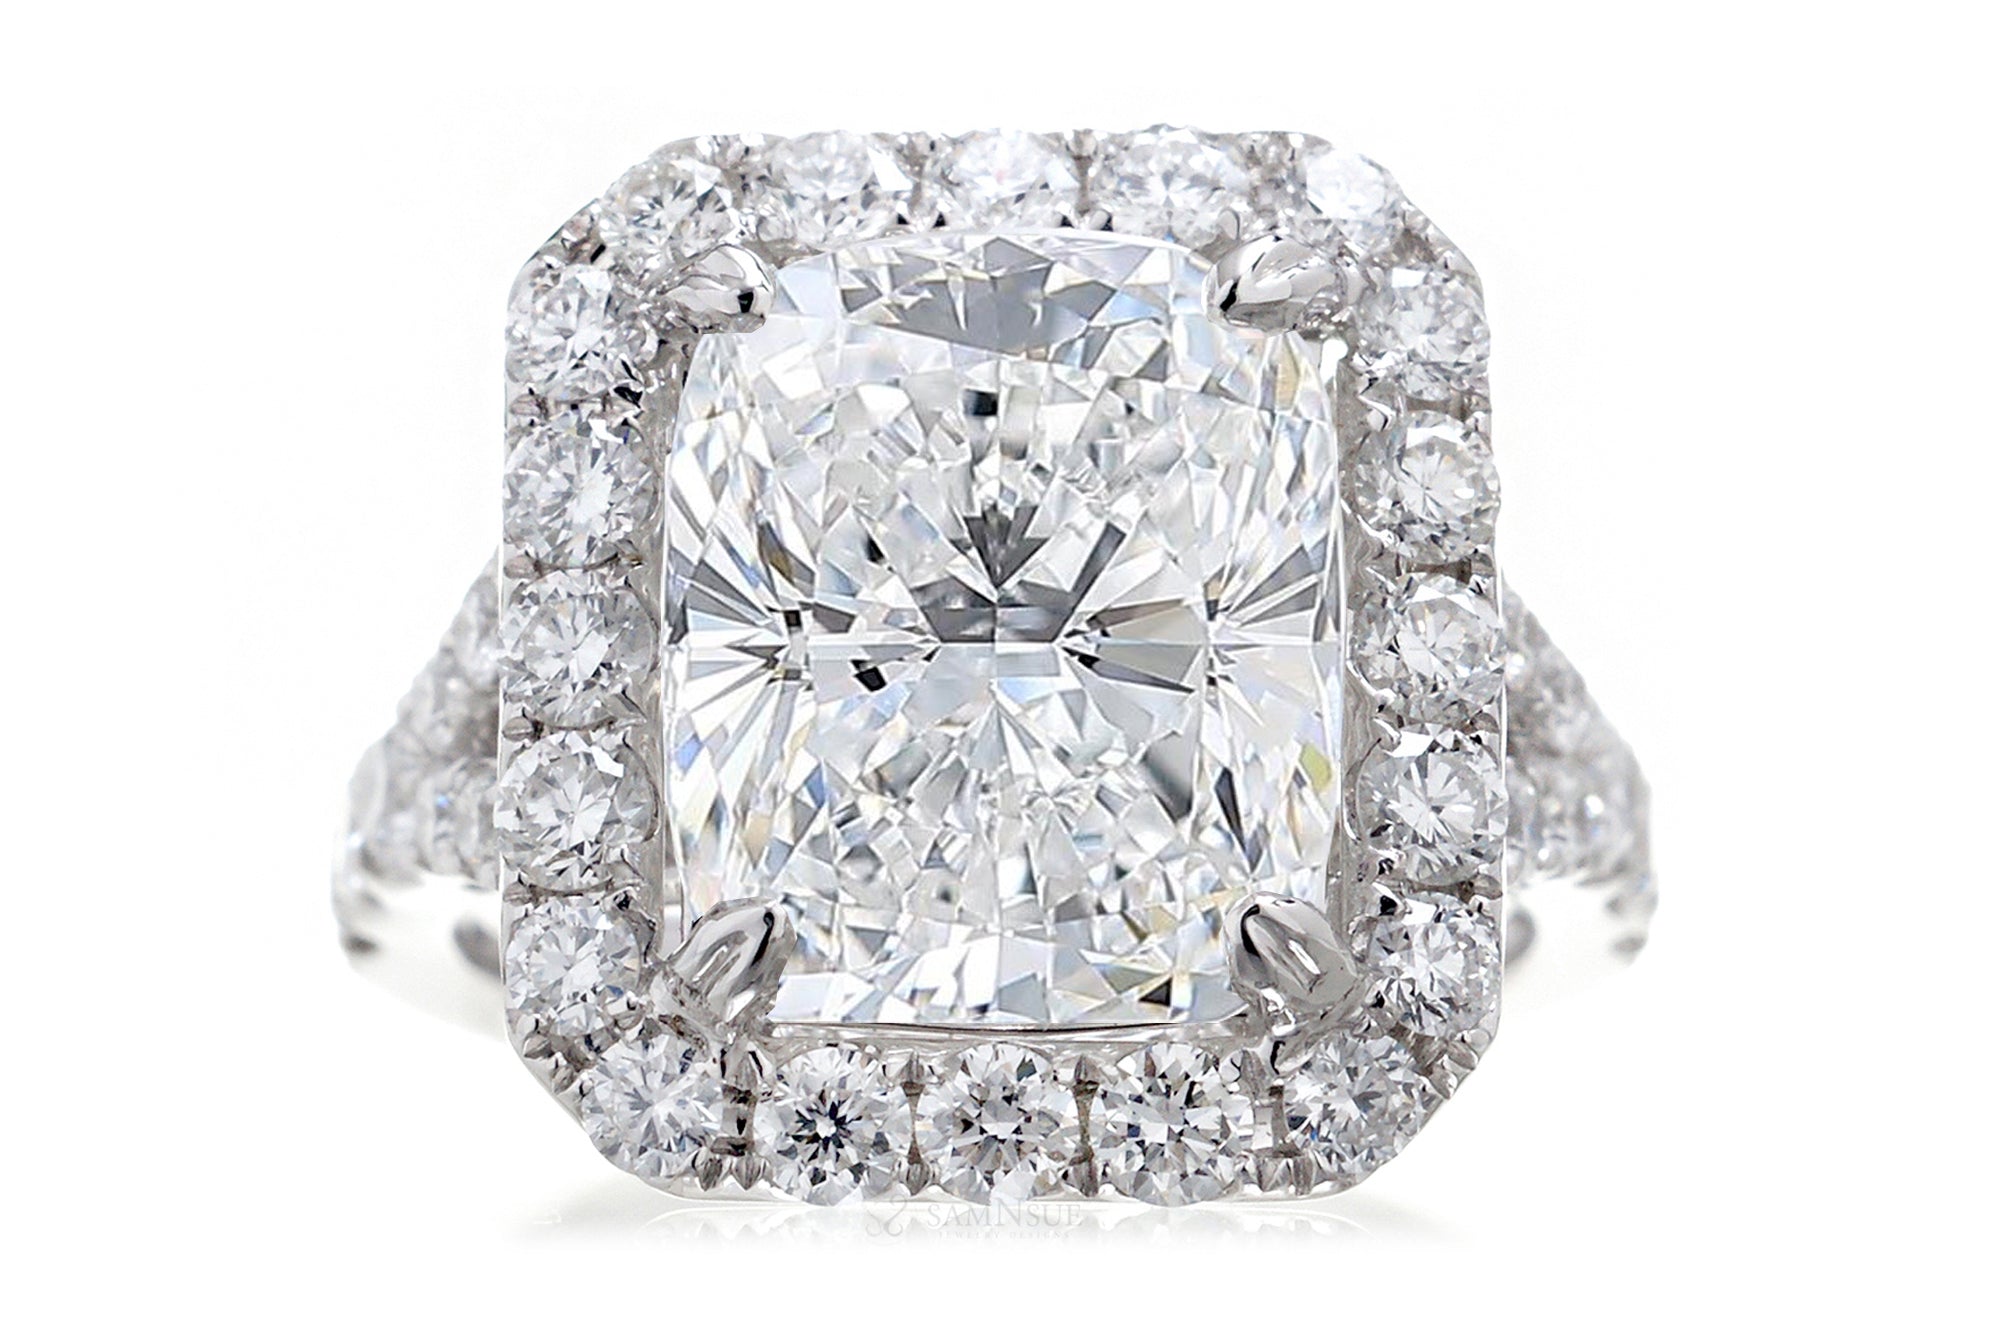 Cushion diamond ring with large halo and split band setting